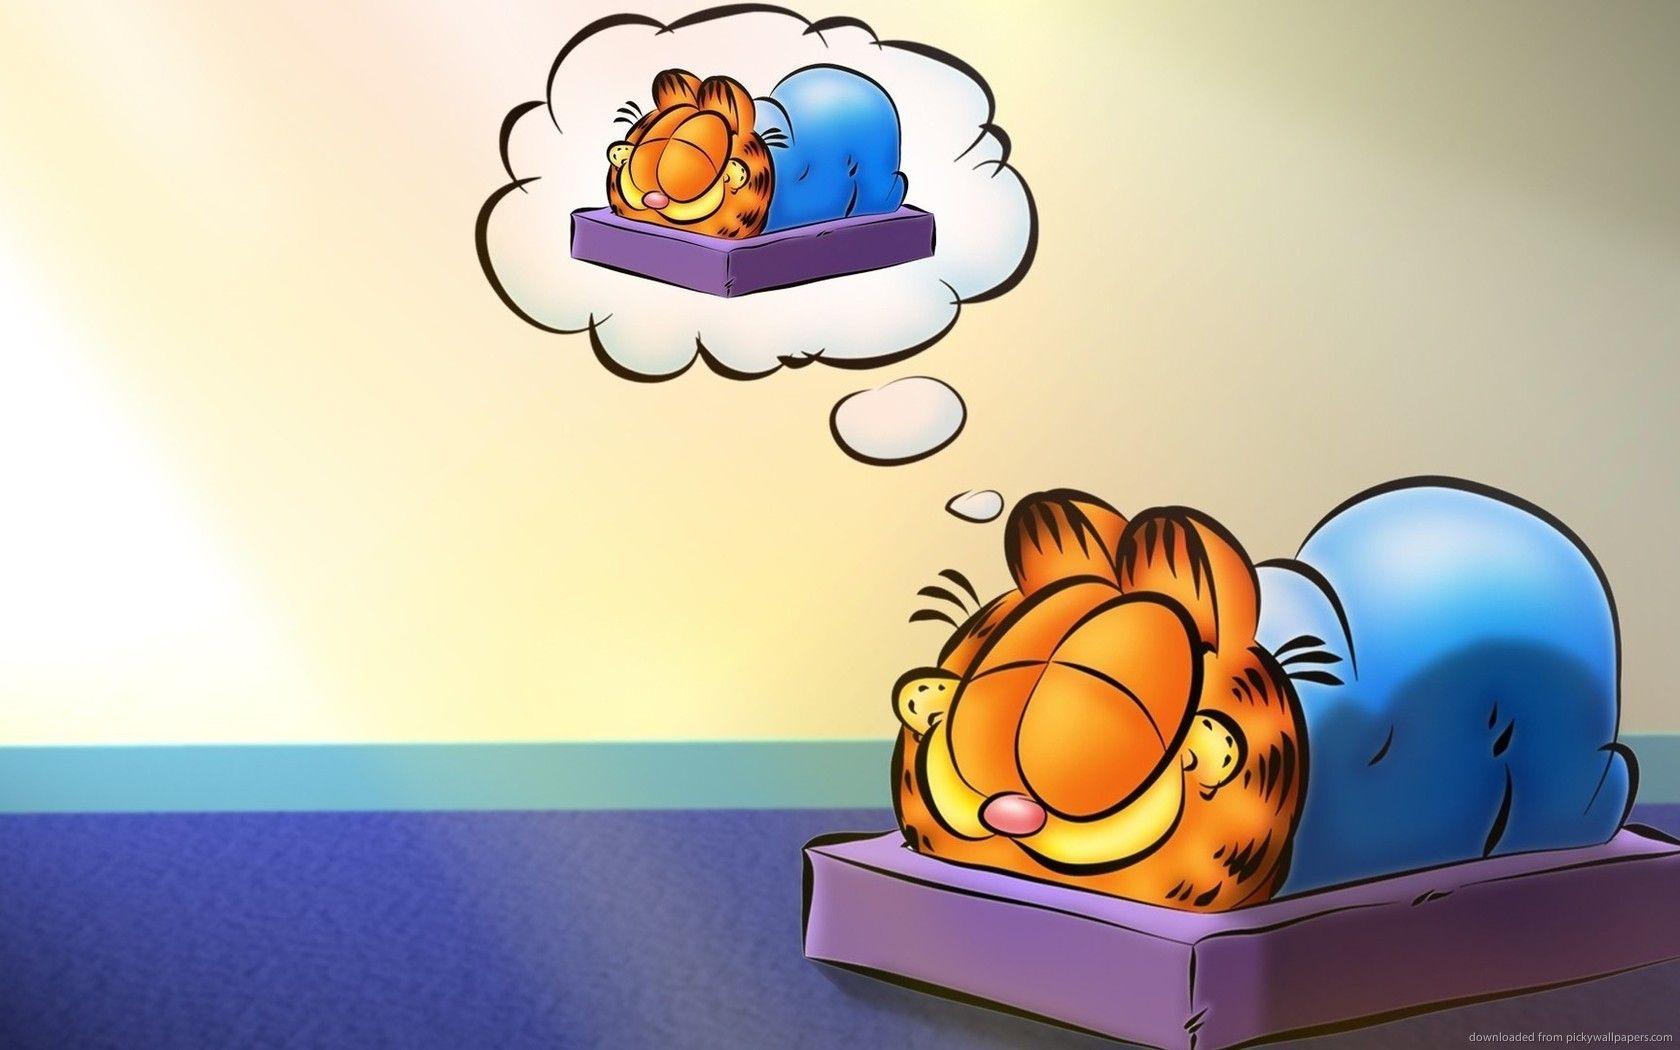 Garfield Sleeping Picture Download For IPod. cartoonwallpaperhd